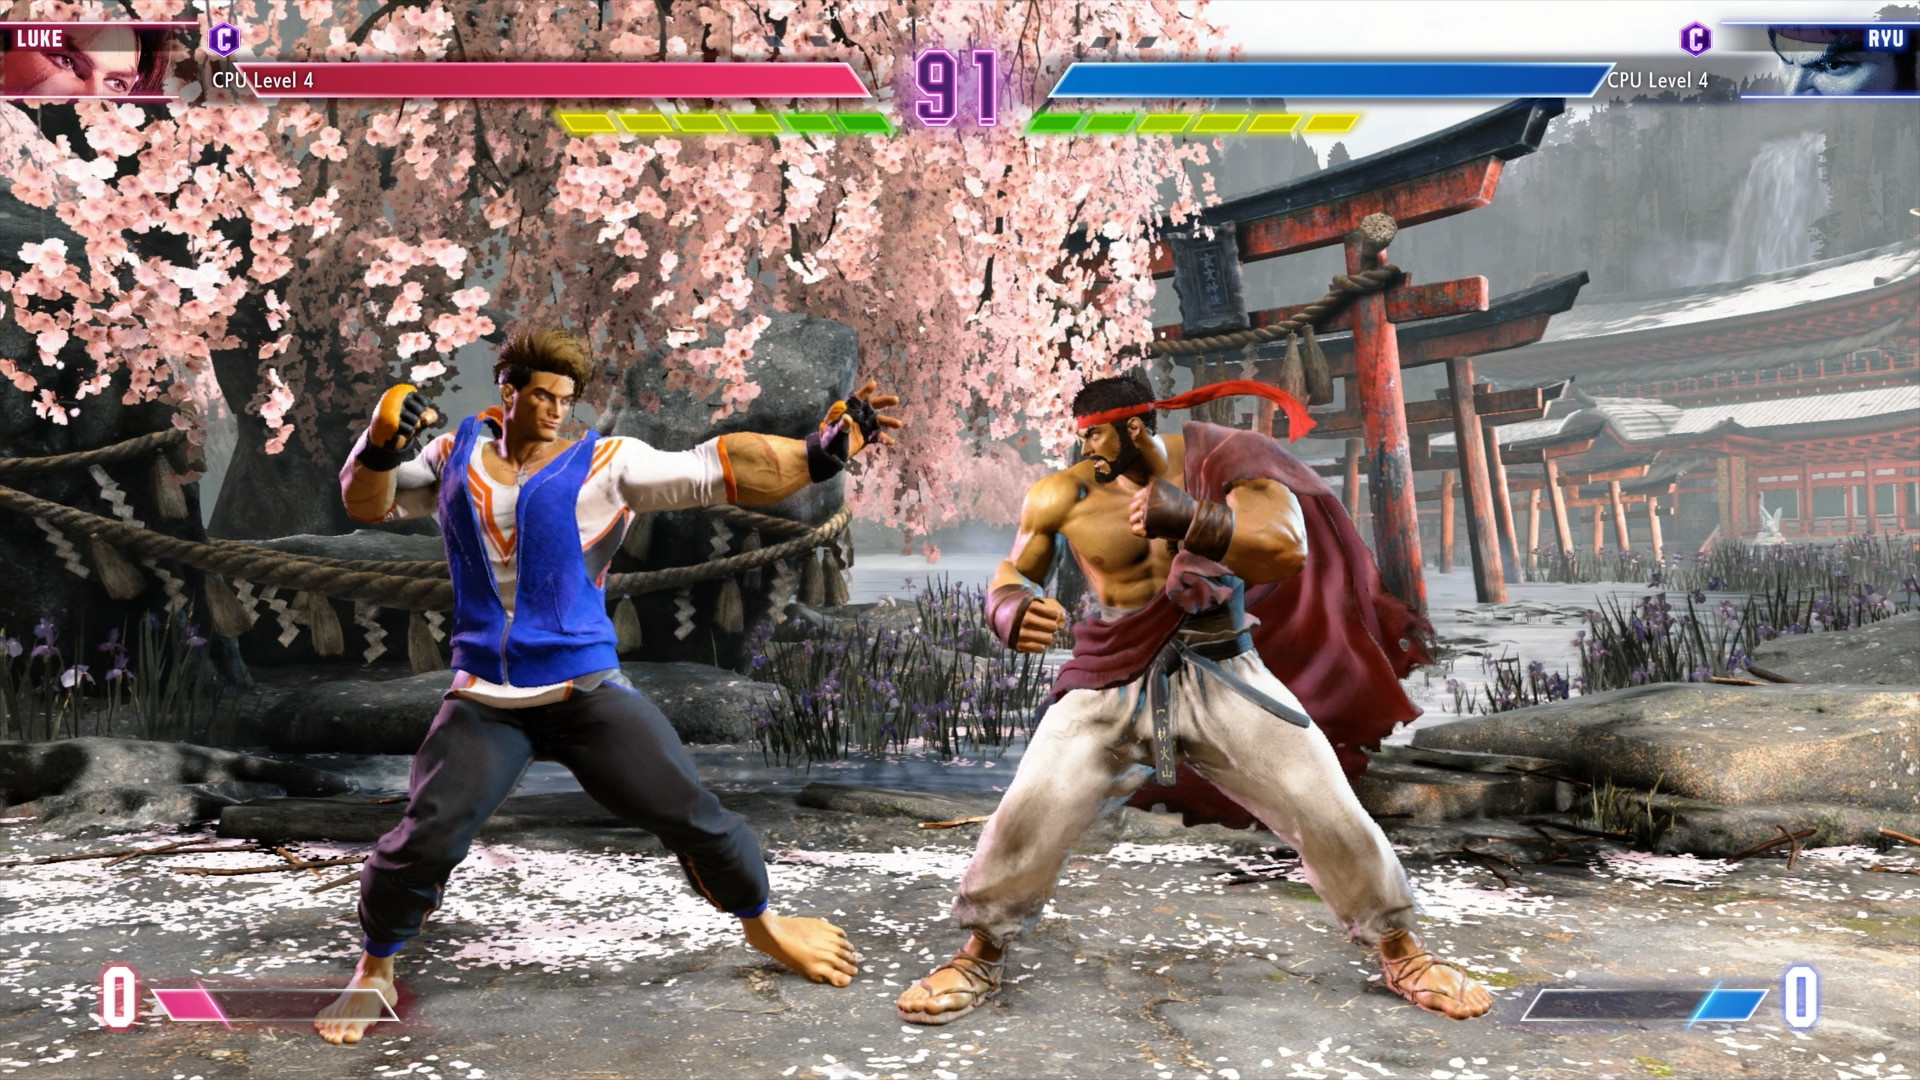 Get Street Fighter™ 6 Demo